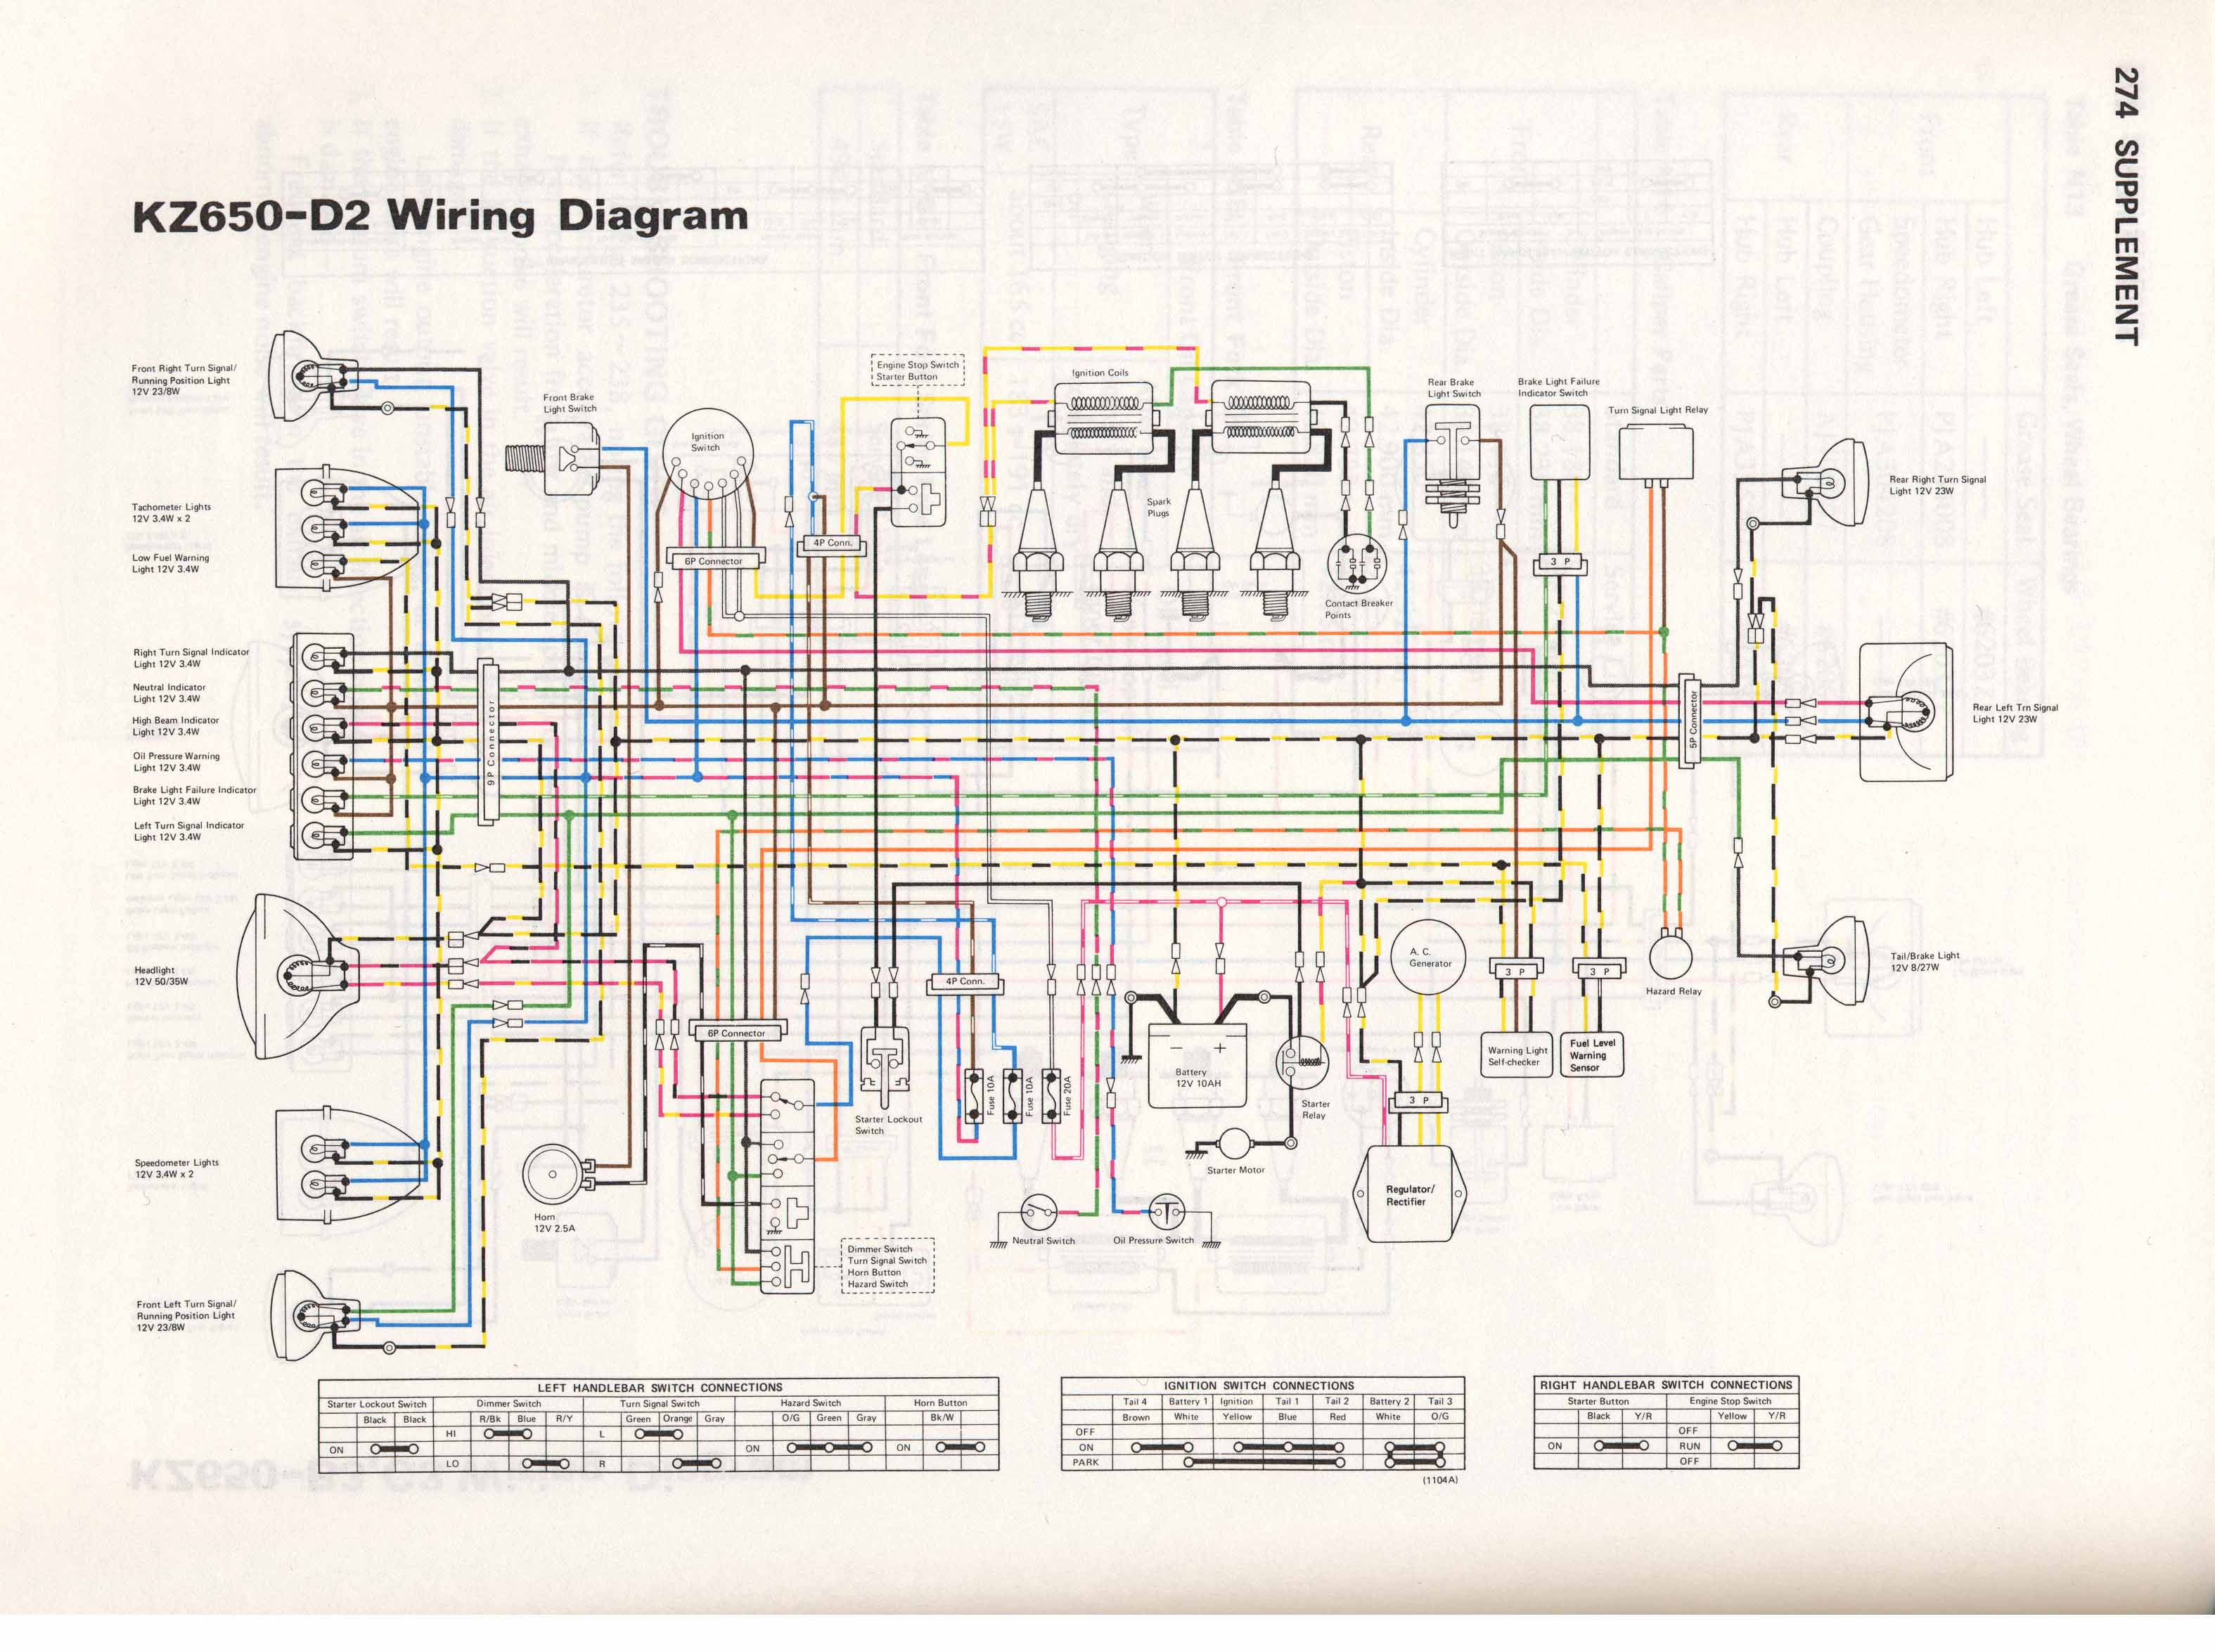 1982-2002 kz1000 police p1 & p21 wiring diagram